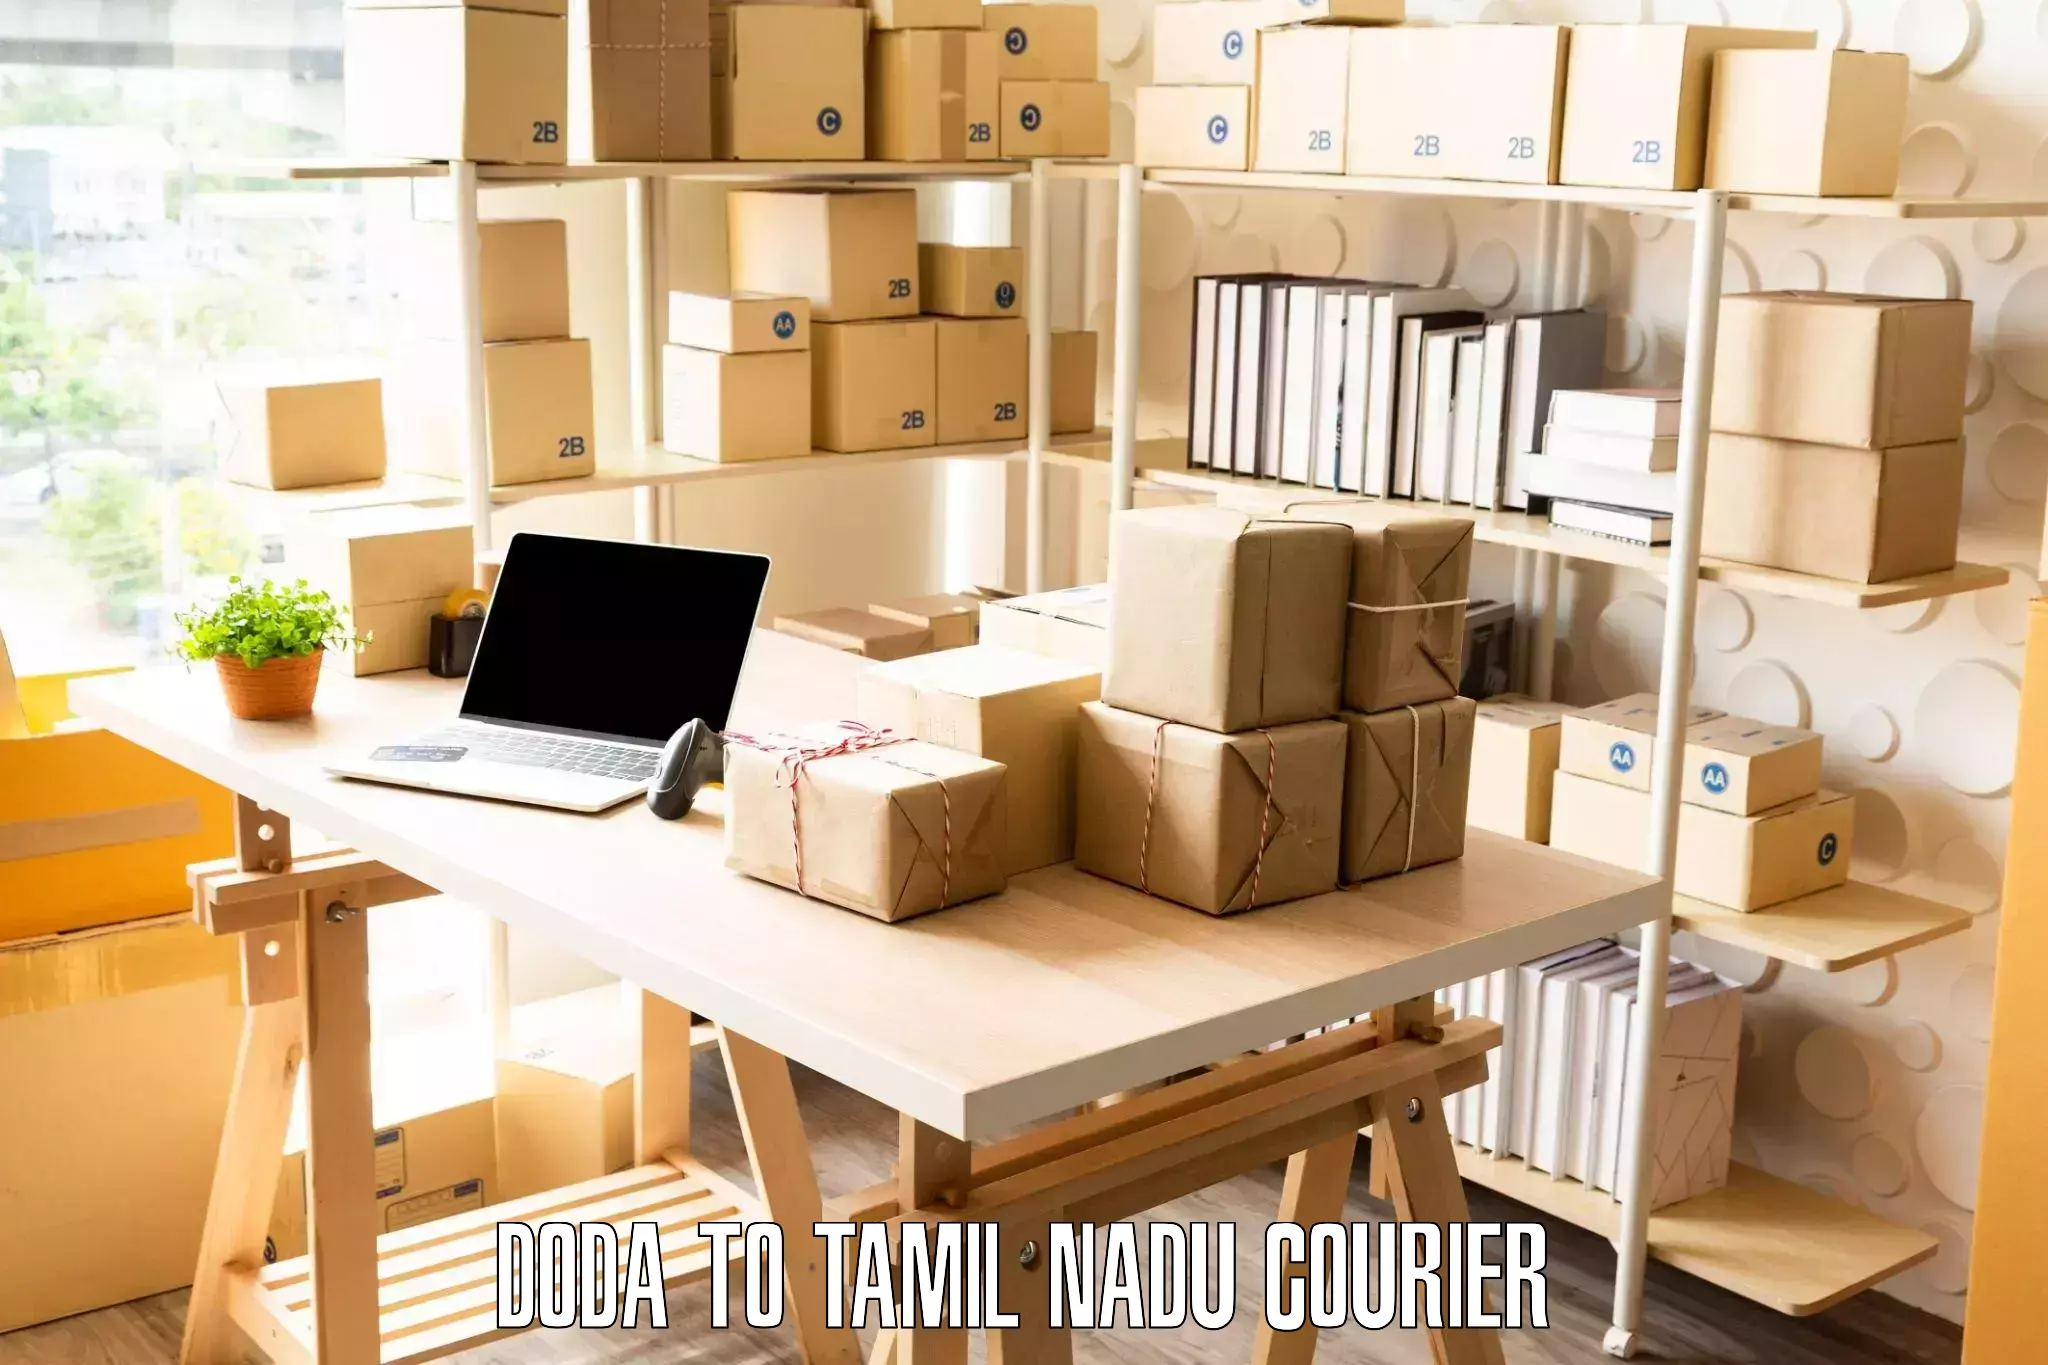 Efficient moving company Doda to Madurai